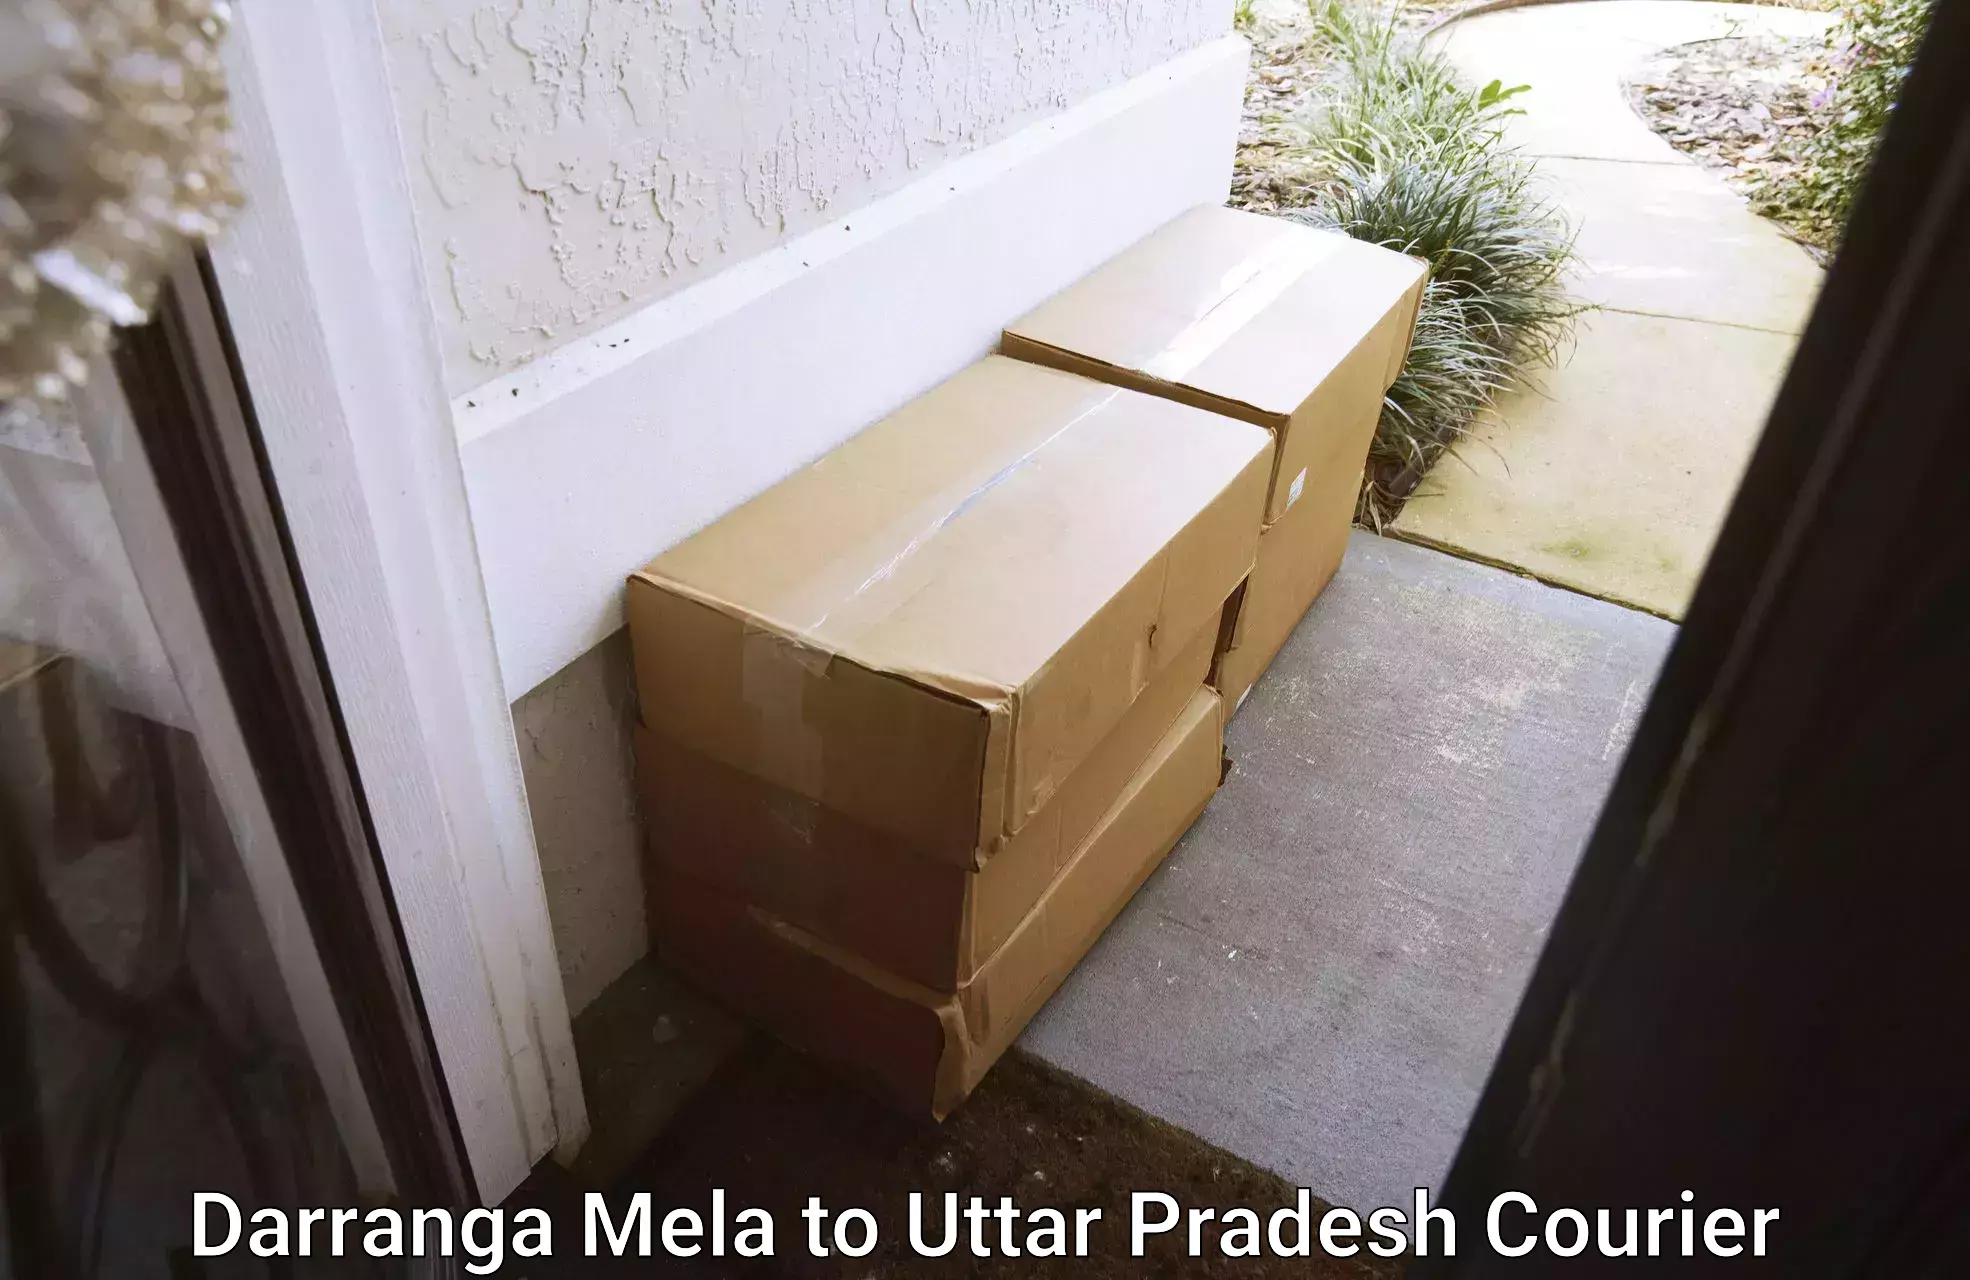 End-to-end delivery Darranga Mela to Uttar Pradesh